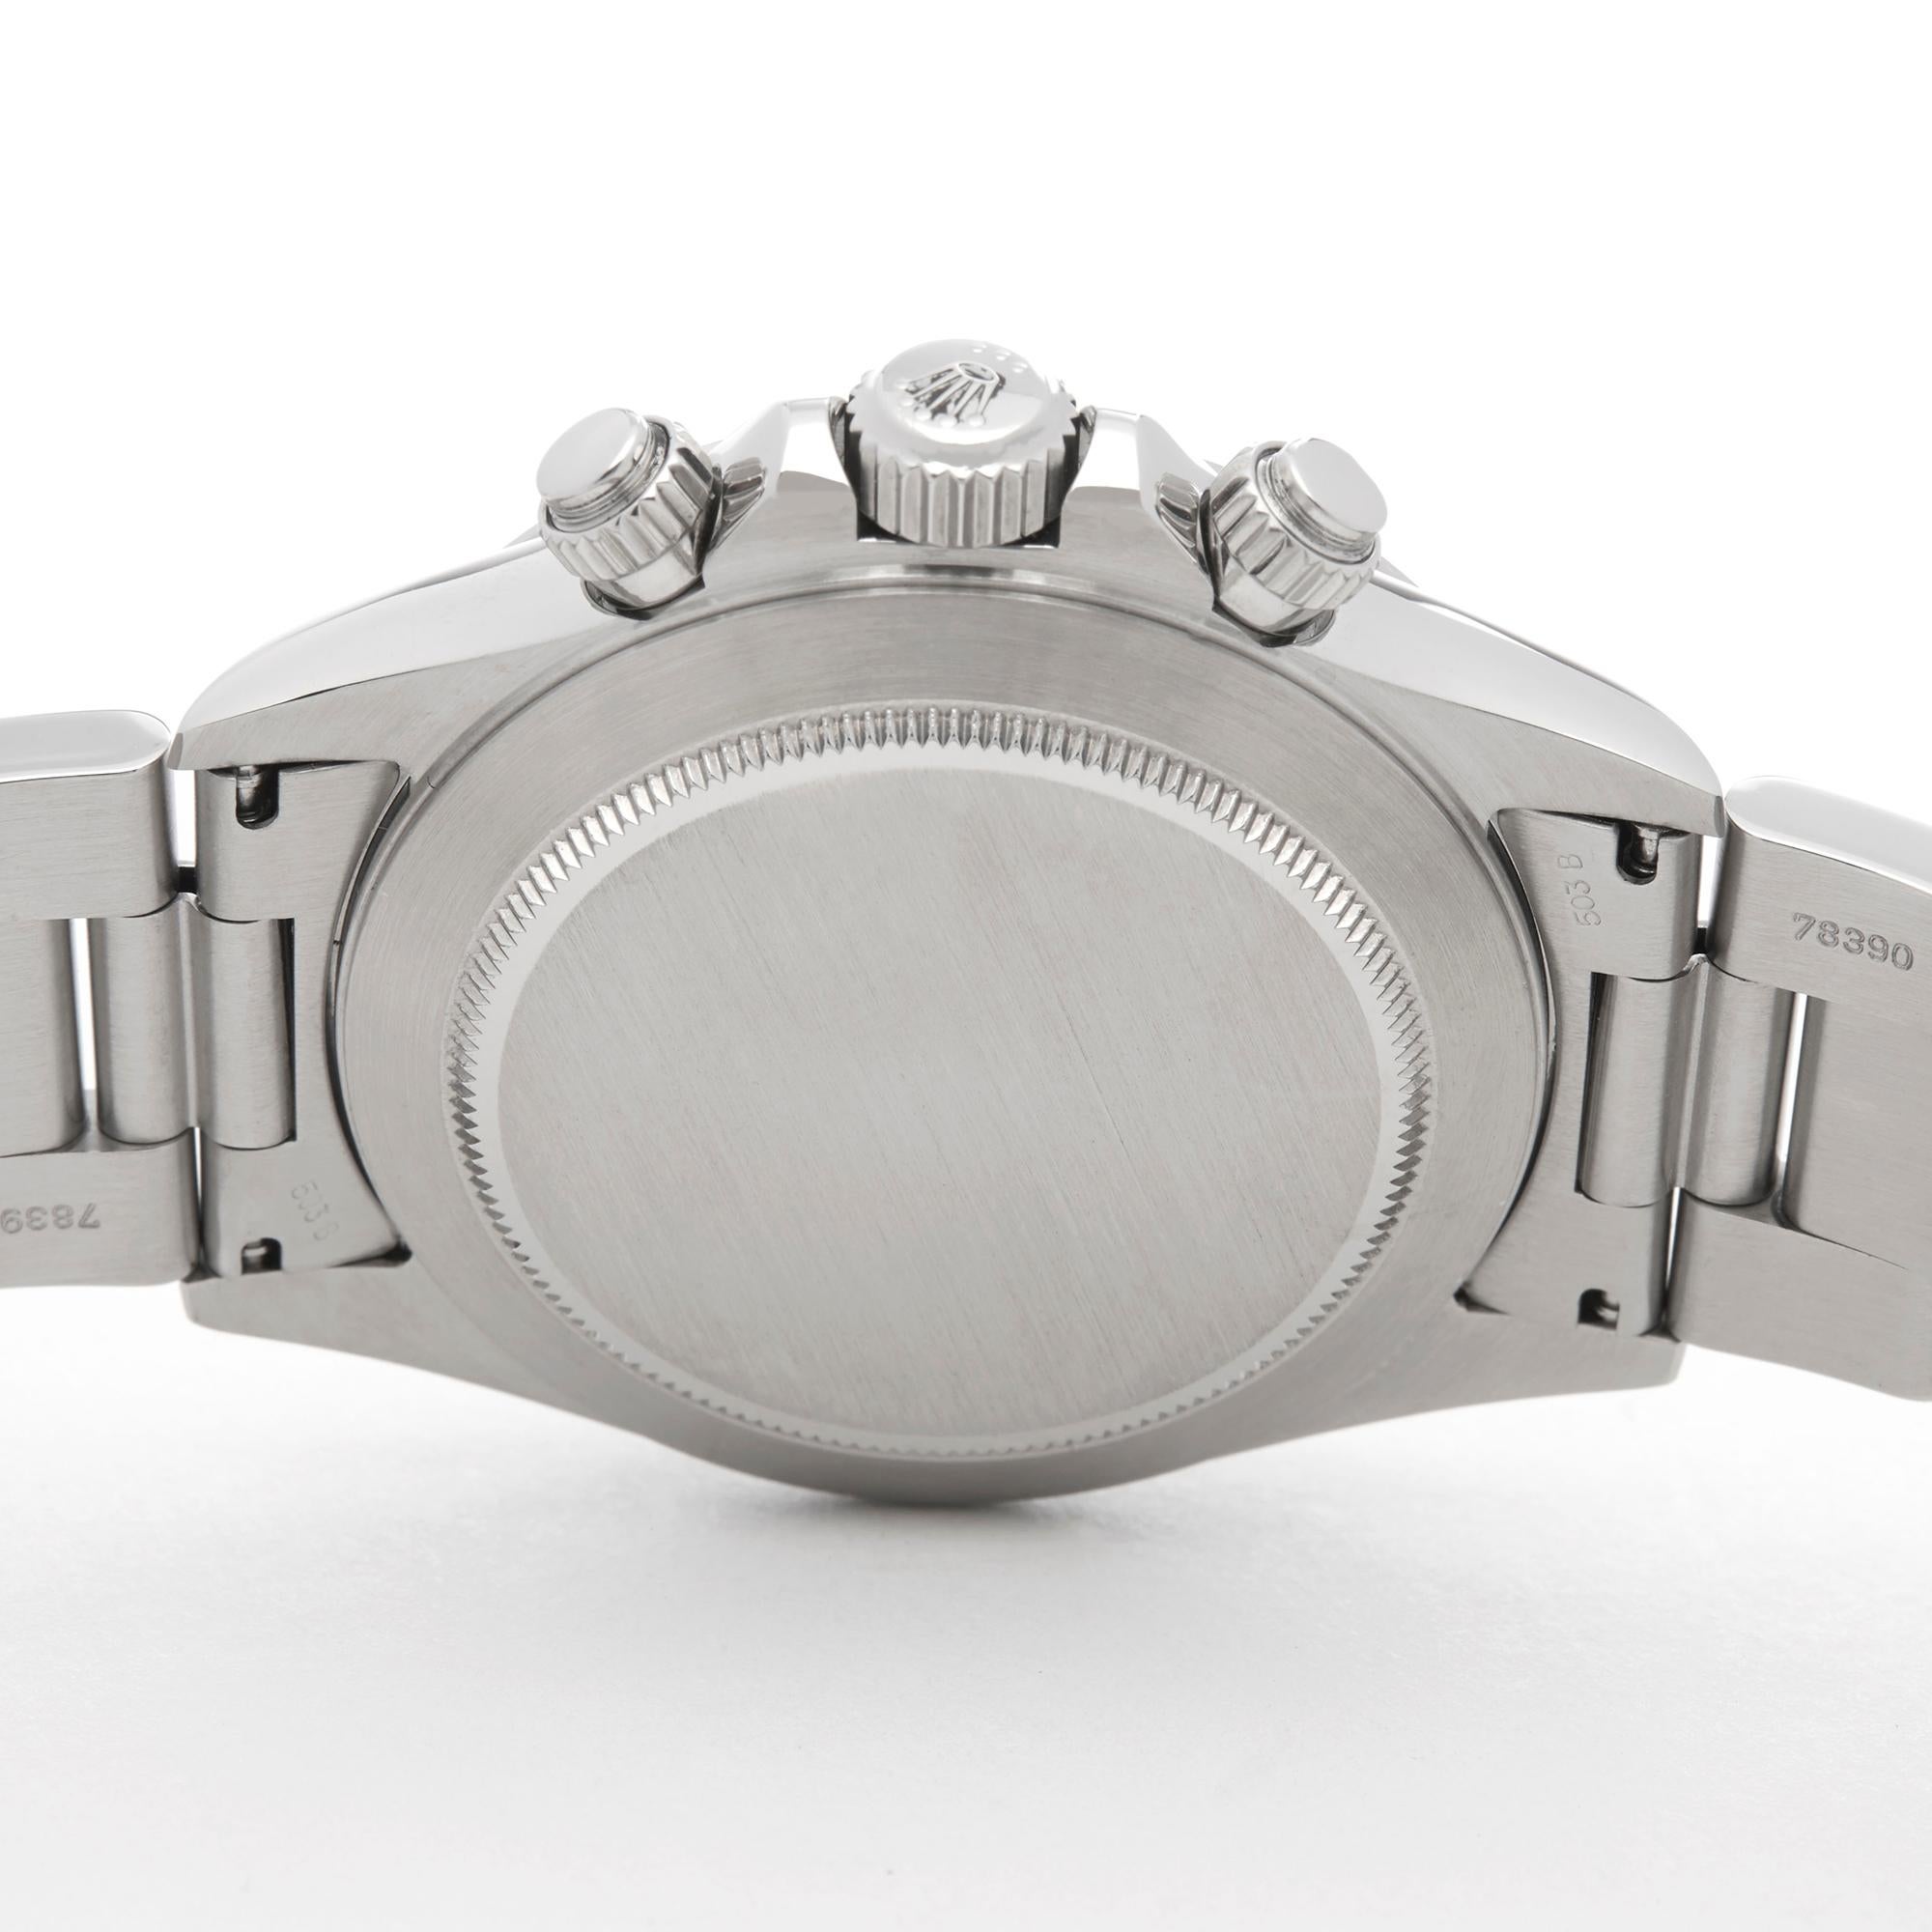 Rolex Daytona Zenith Chronograph Stainless Steel 16520 3